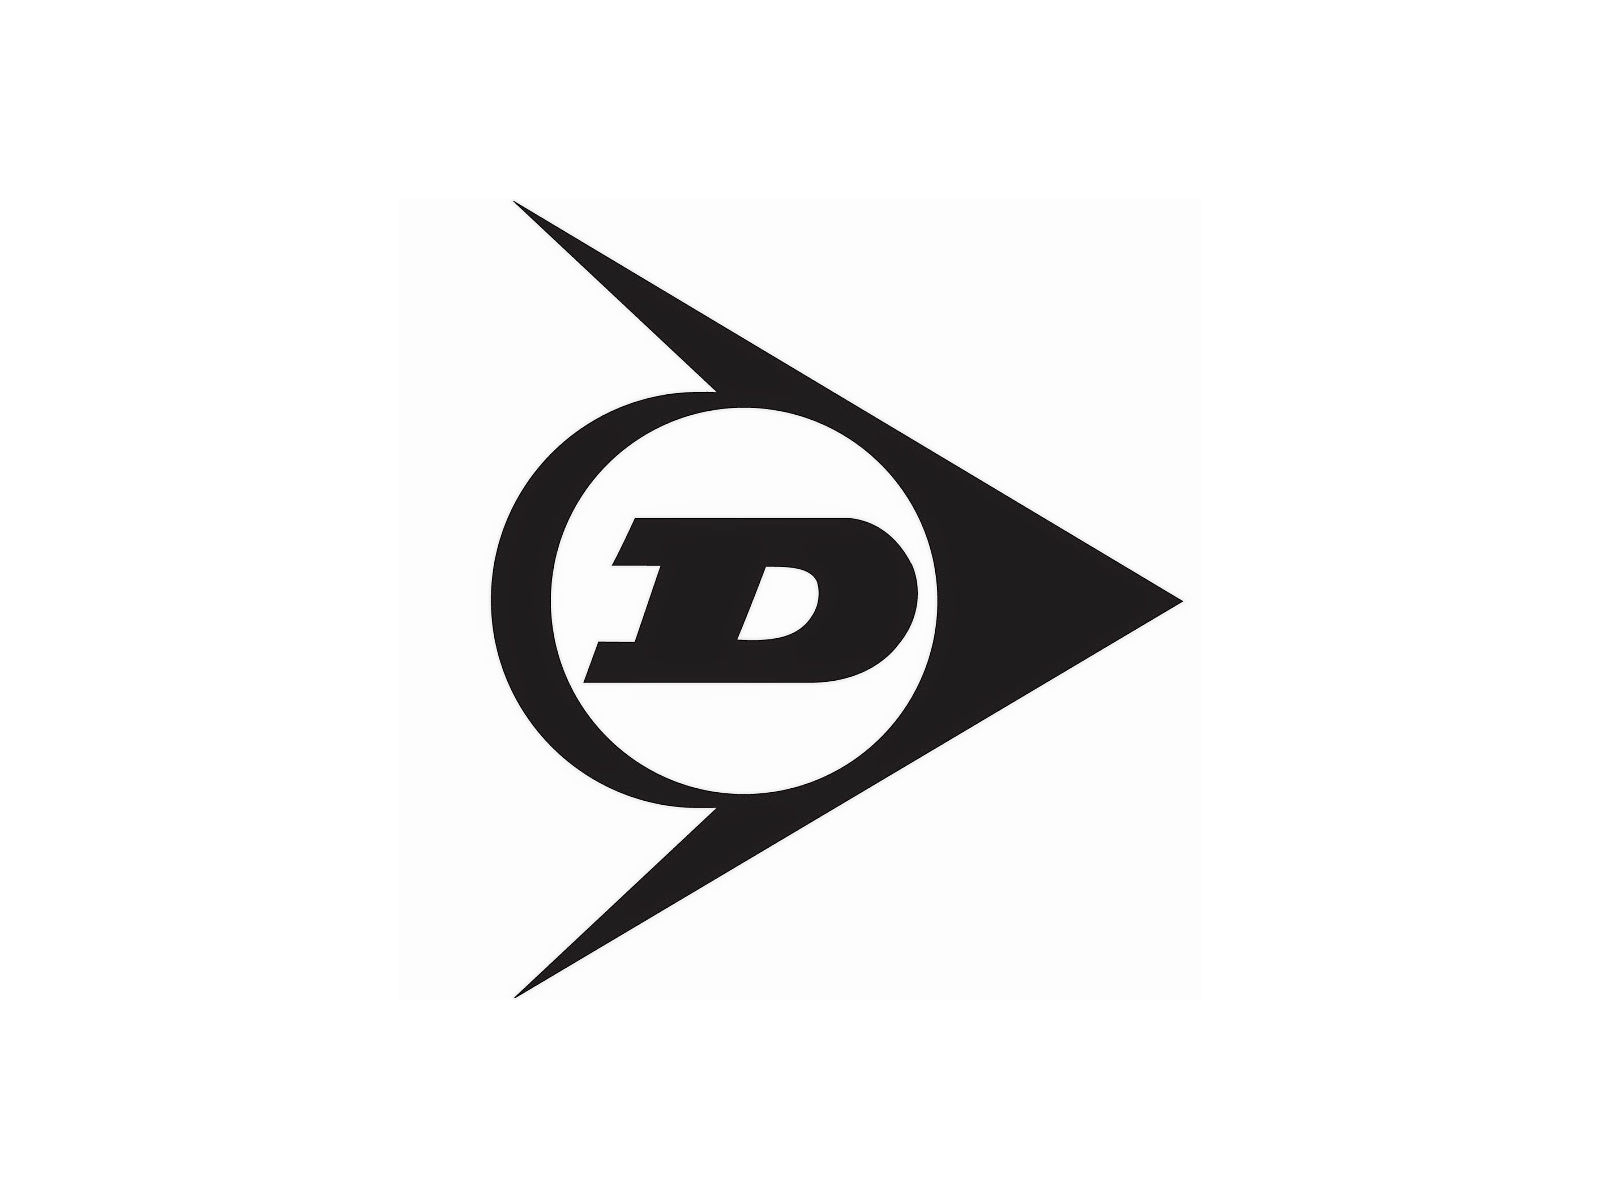 Black D Logo - Dunlop logo